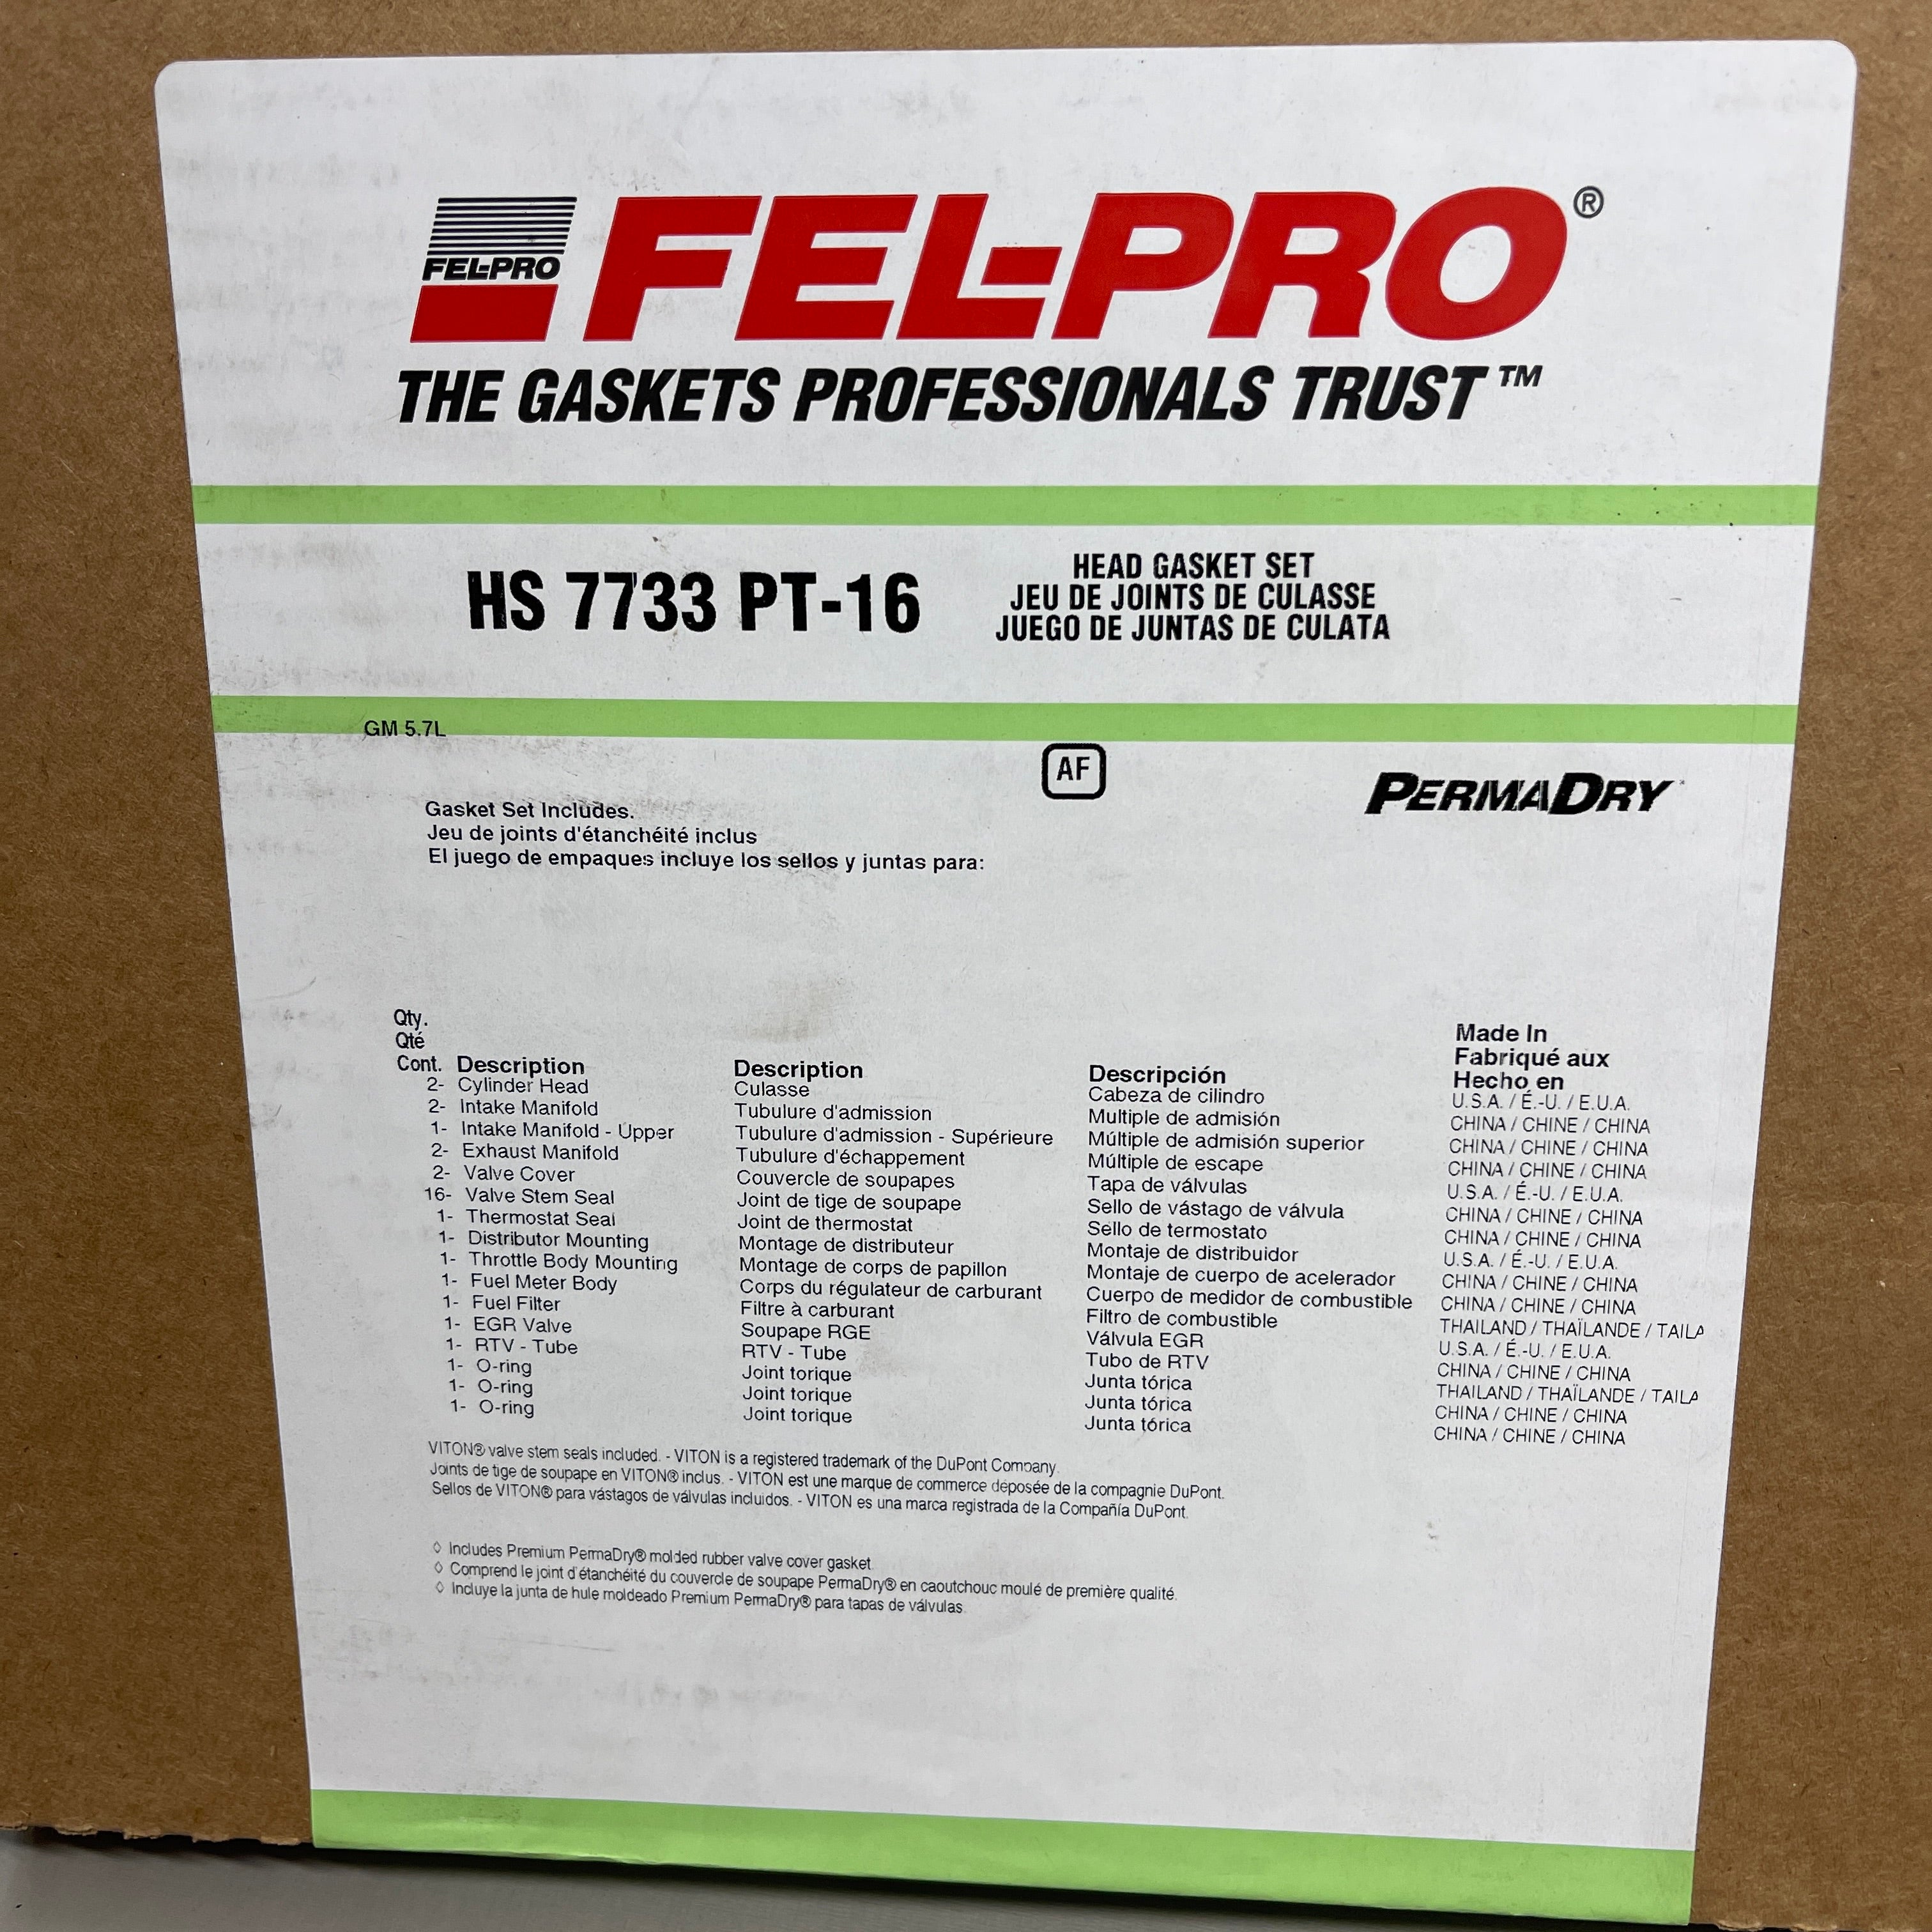 FEL-PRO Head Gasket for GM 5.7L HS 7733 PT-16 (New) – PayWut